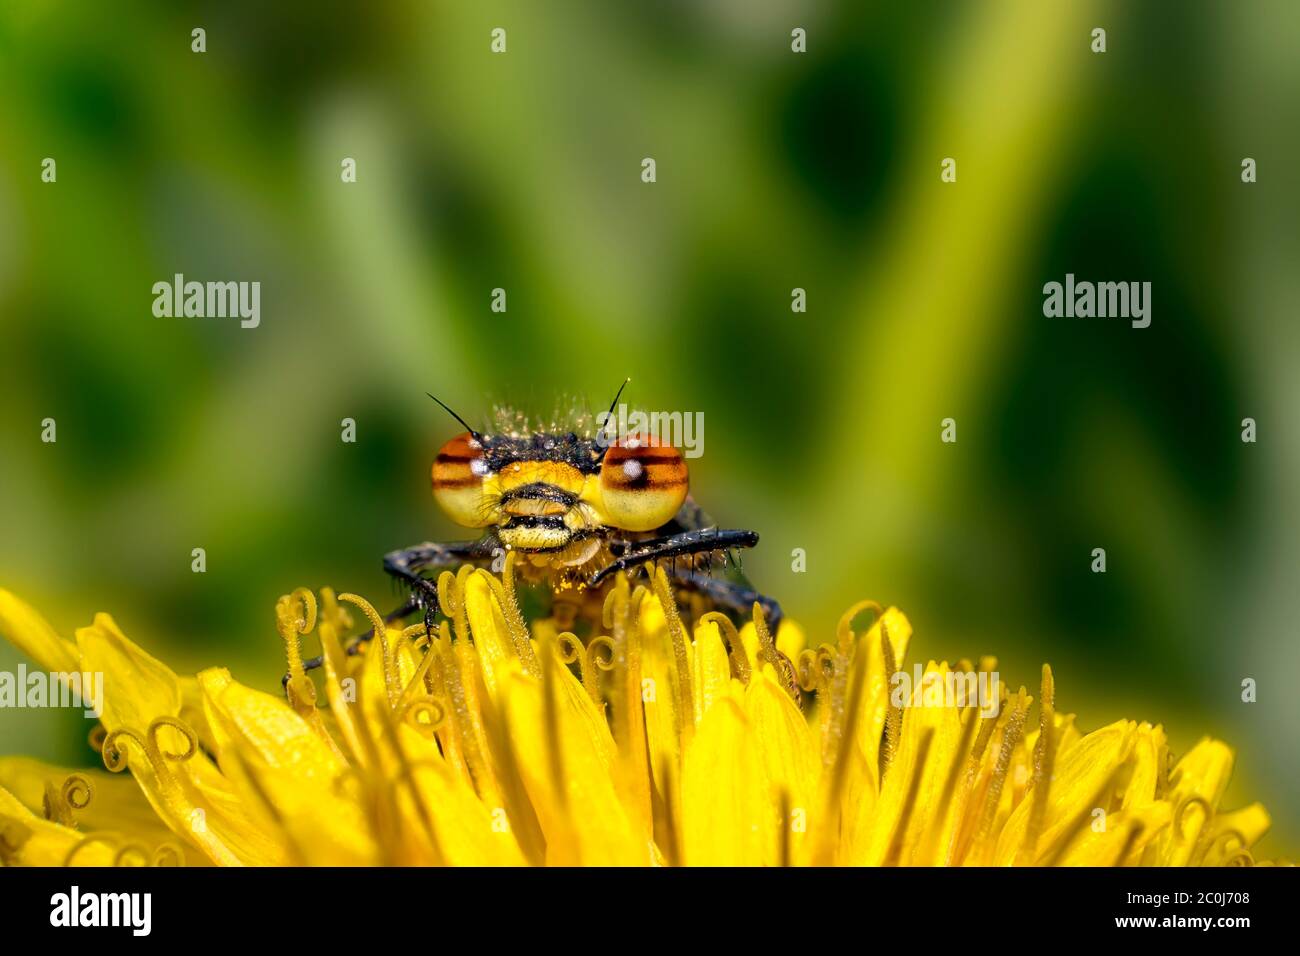 dragon fly on yellow dandelion flower in summer season Stock Photo